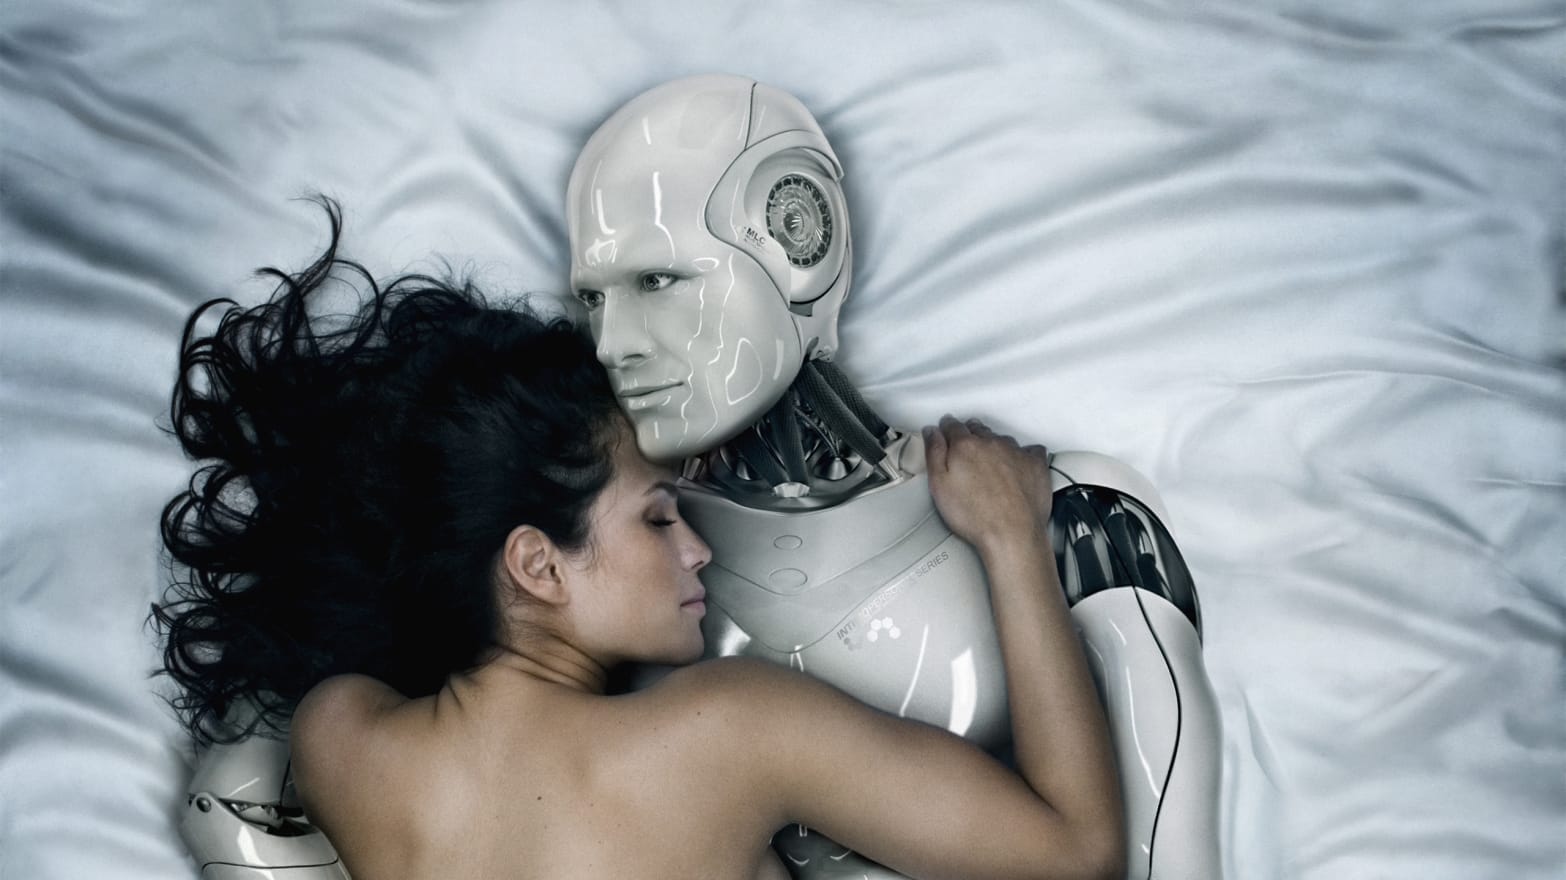 Xxx 2050sex - Sex In 2050: More Robots, Less Humans